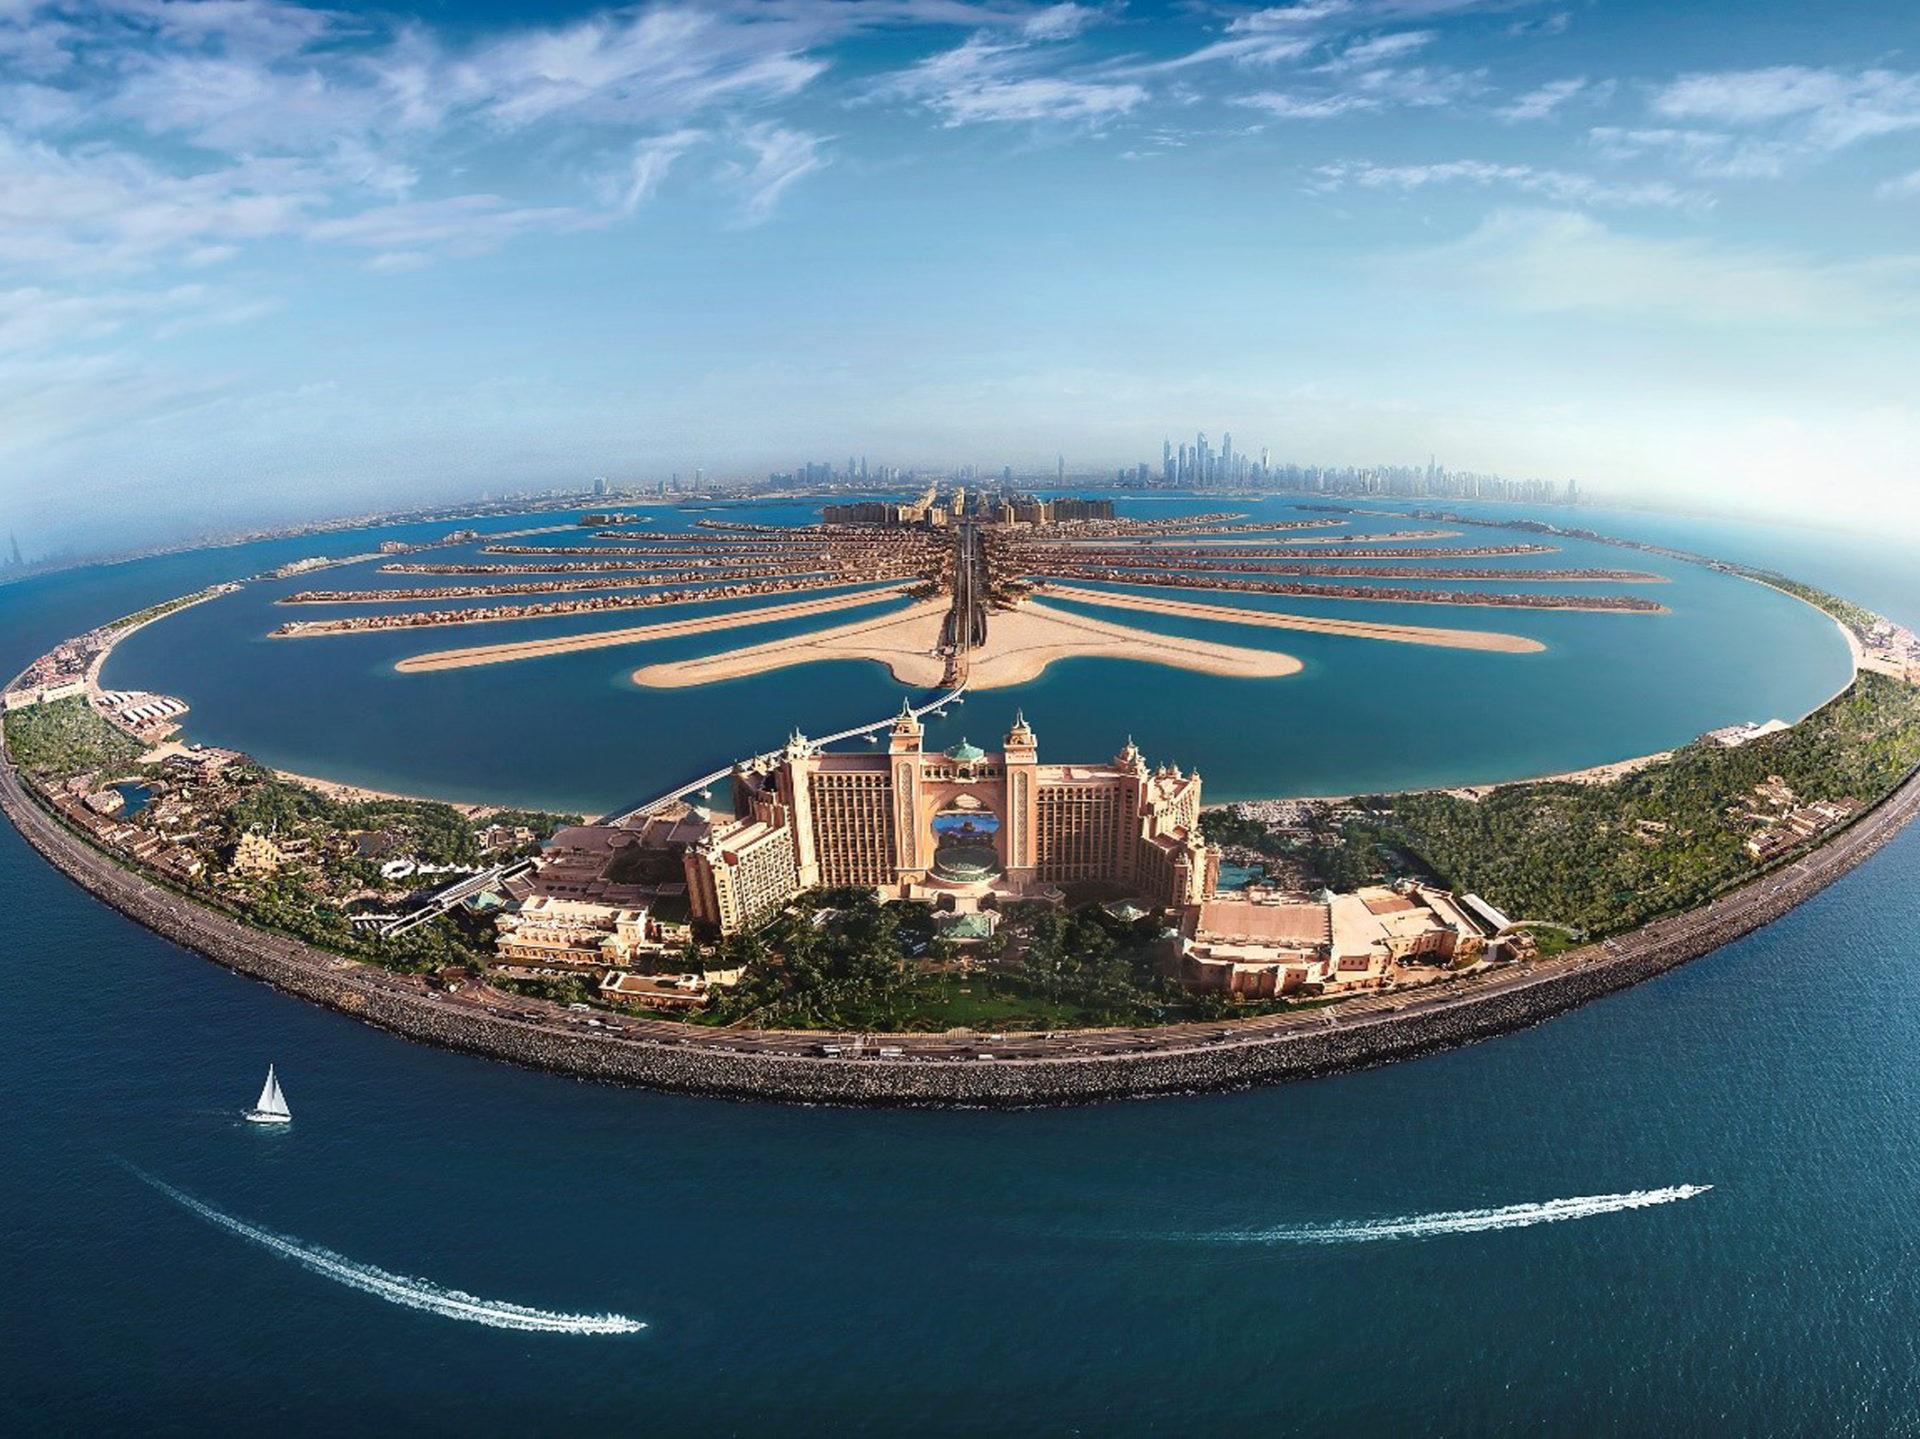 Dubai Hotel Atlantis Palm Jumeirah Island Overlooking The Arabian